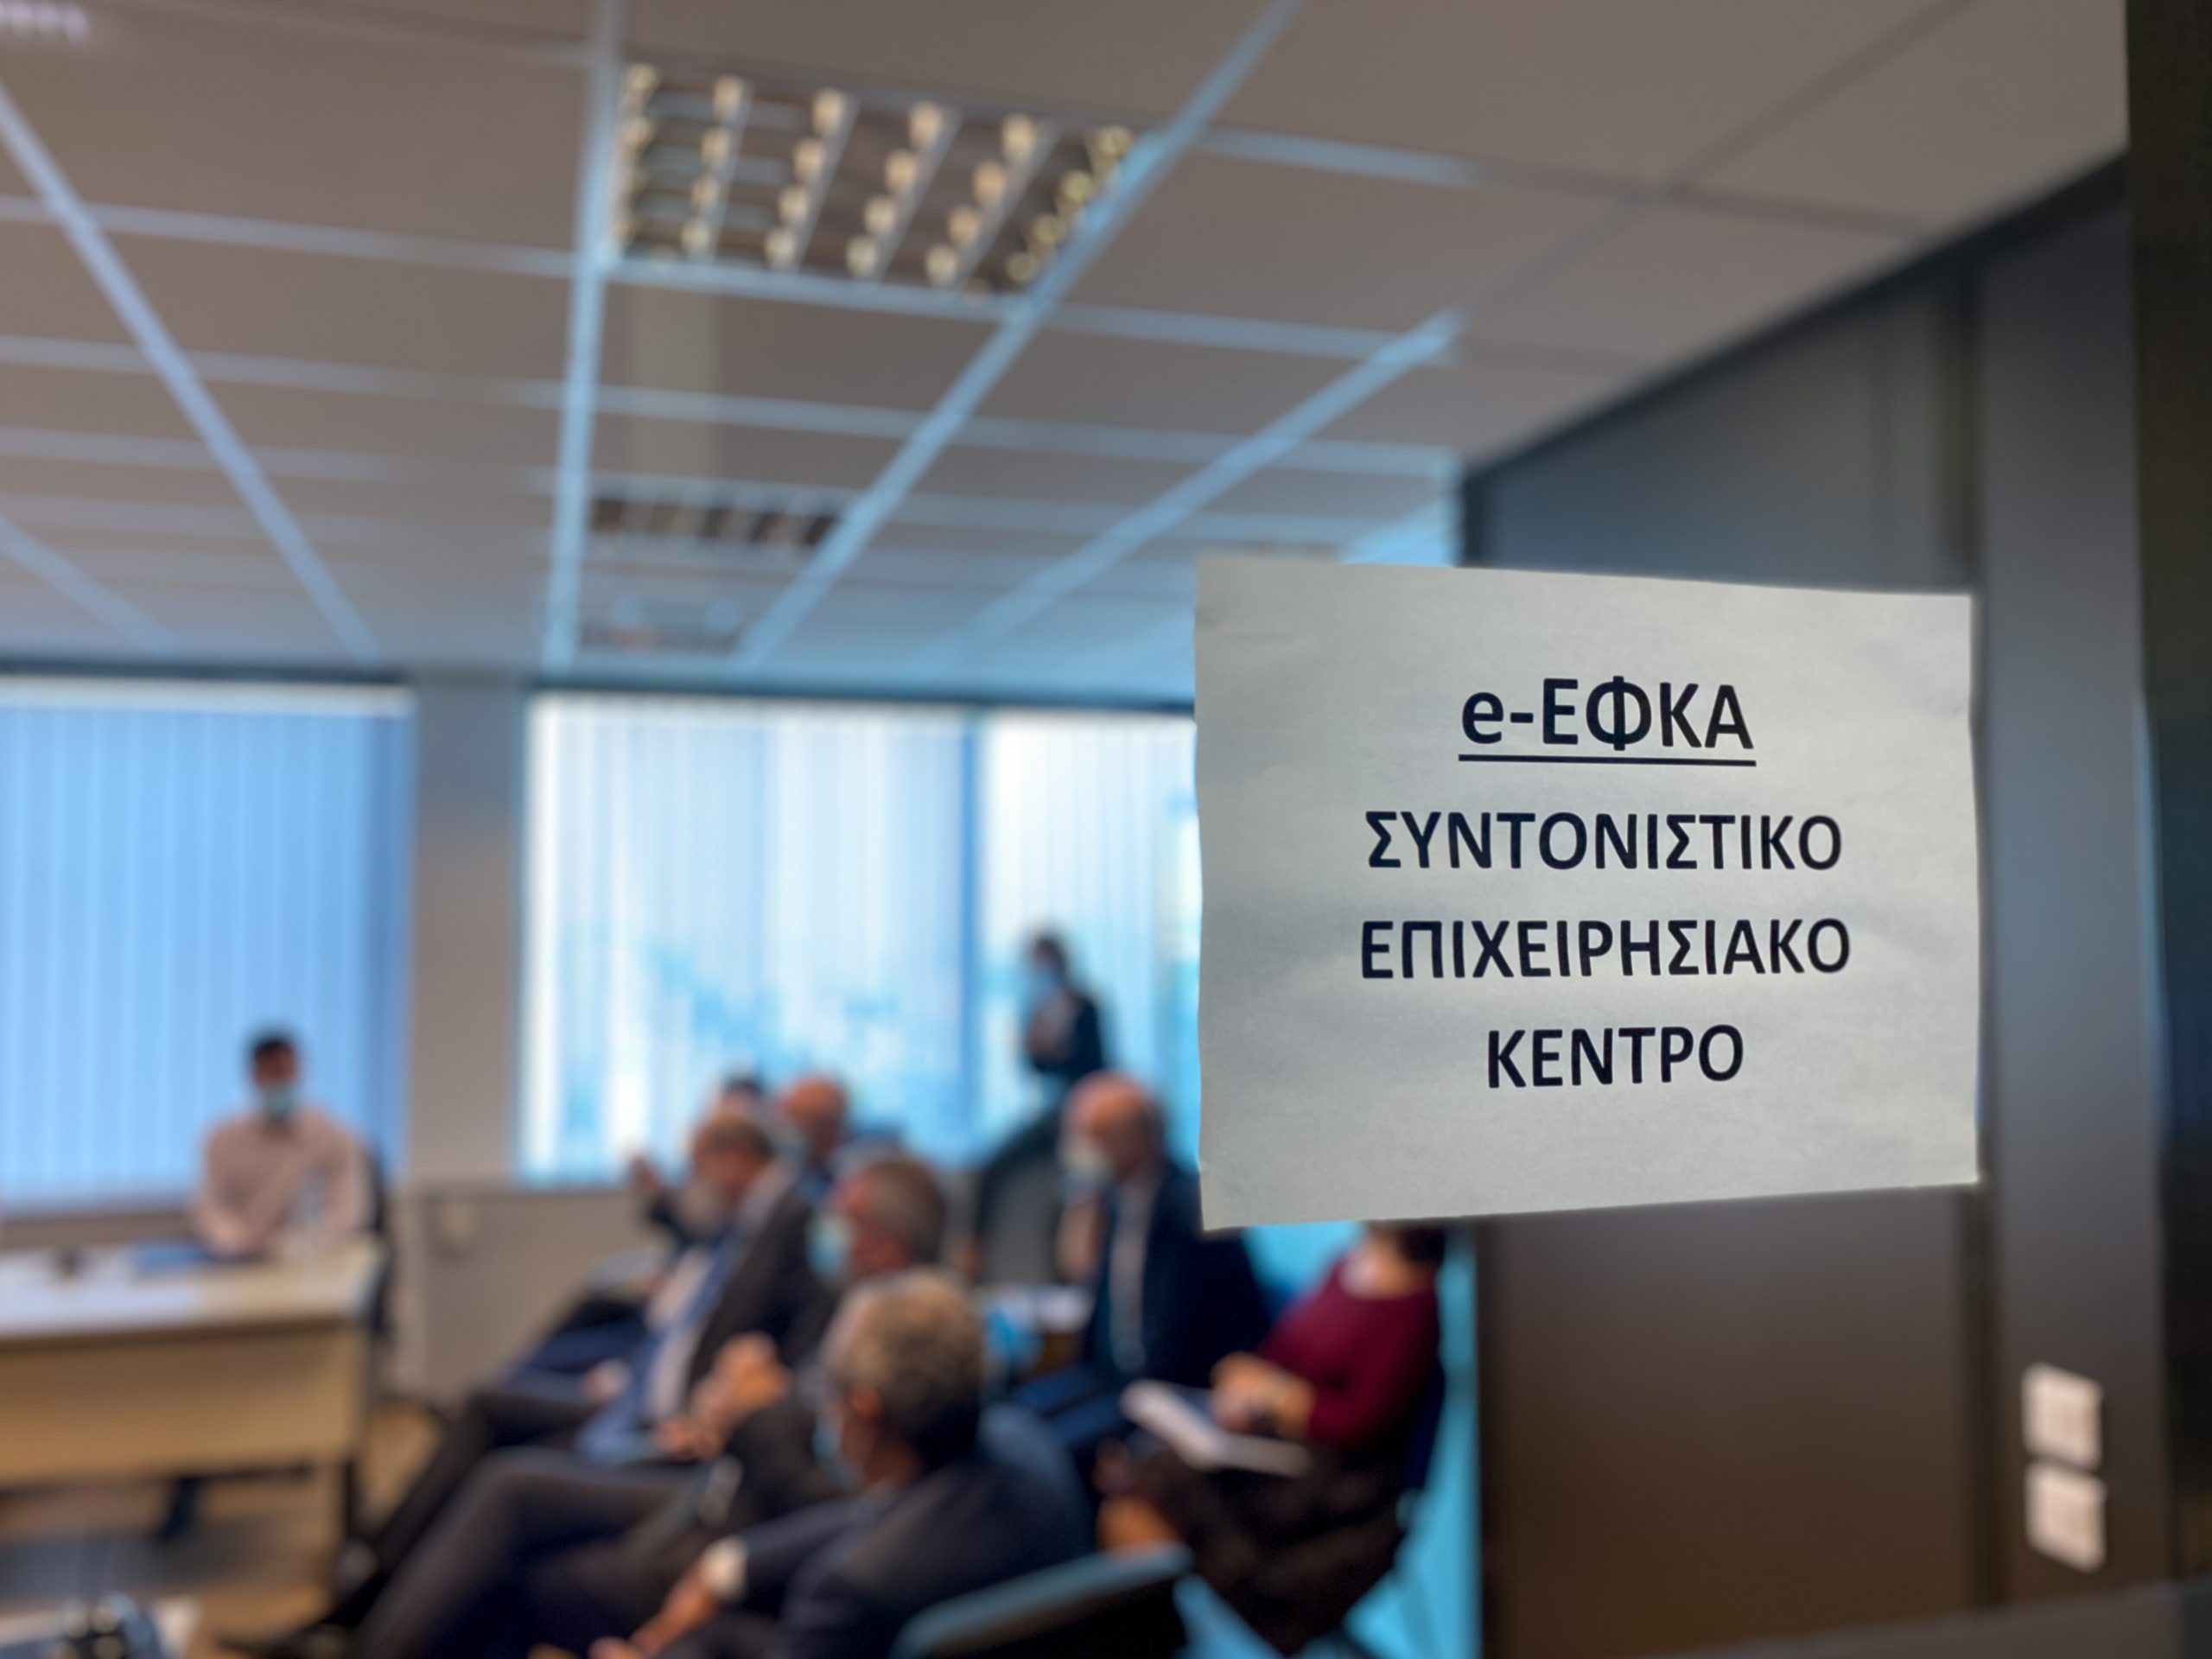 e-ΕΦΚΑ – Οι πιστοποιημένοι λογιστές και δικηγόροι ήρθαν για να μείνουν